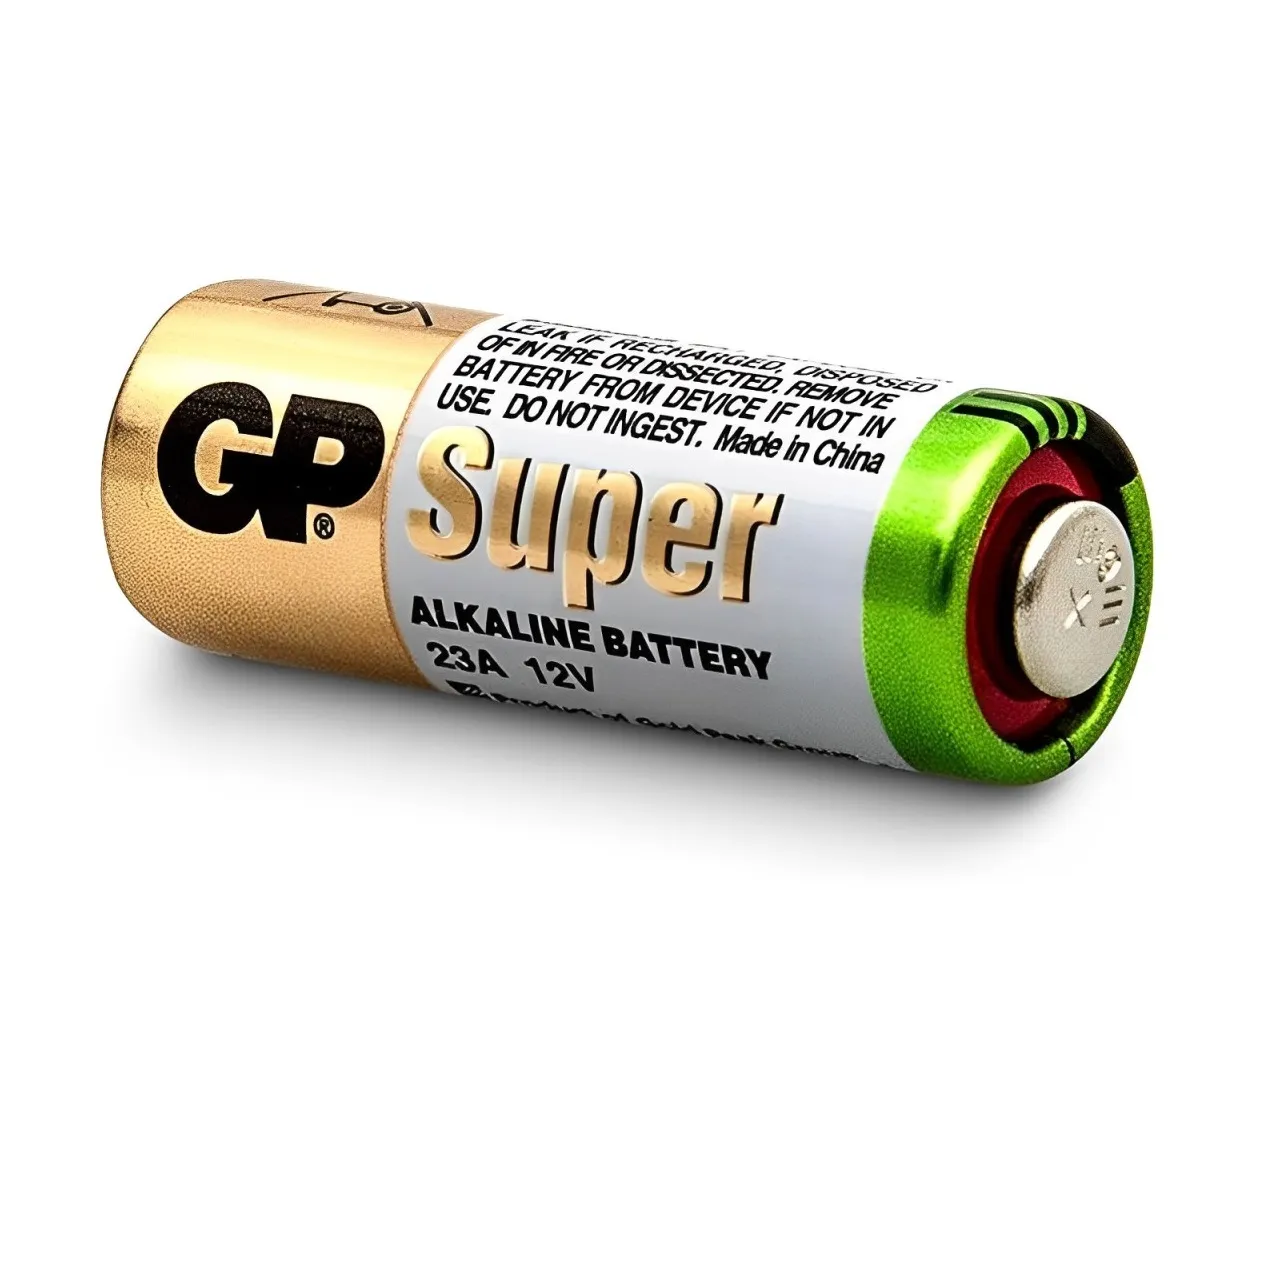 Pila Batería Gp 23a 12v Alcalina Alto Voltaje